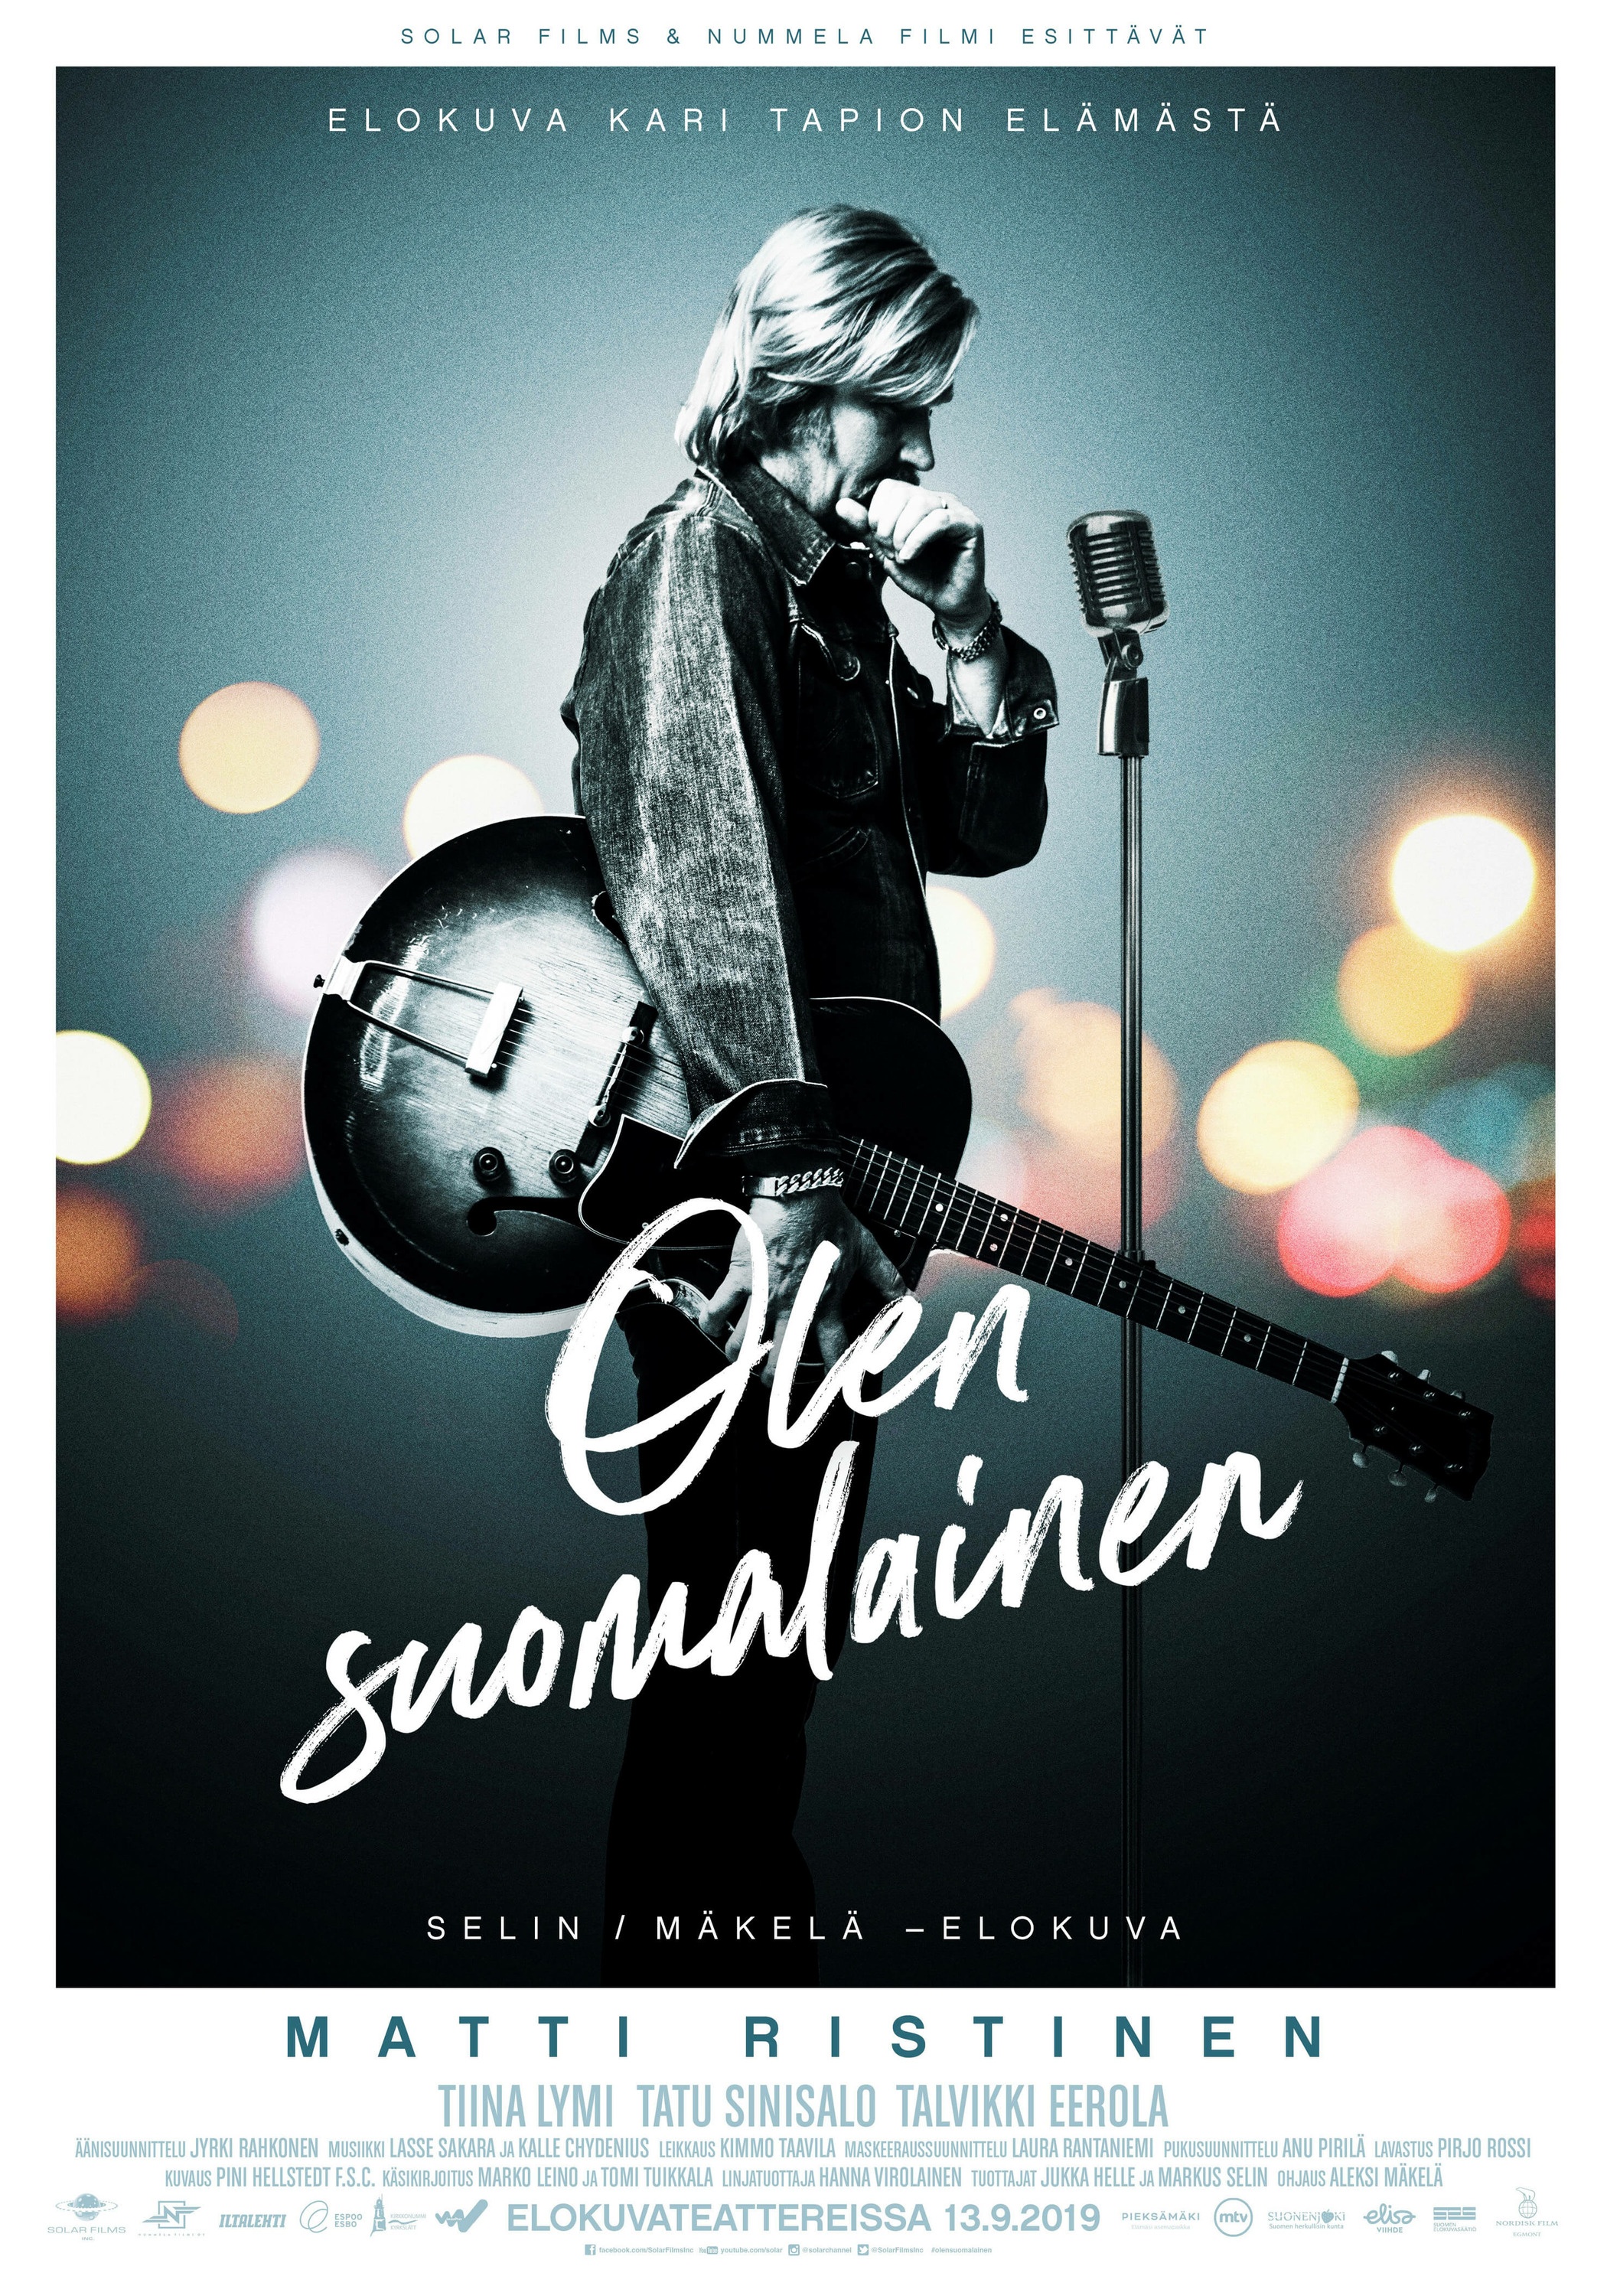 Mega Sized Movie Poster Image for Olen suomalainen 